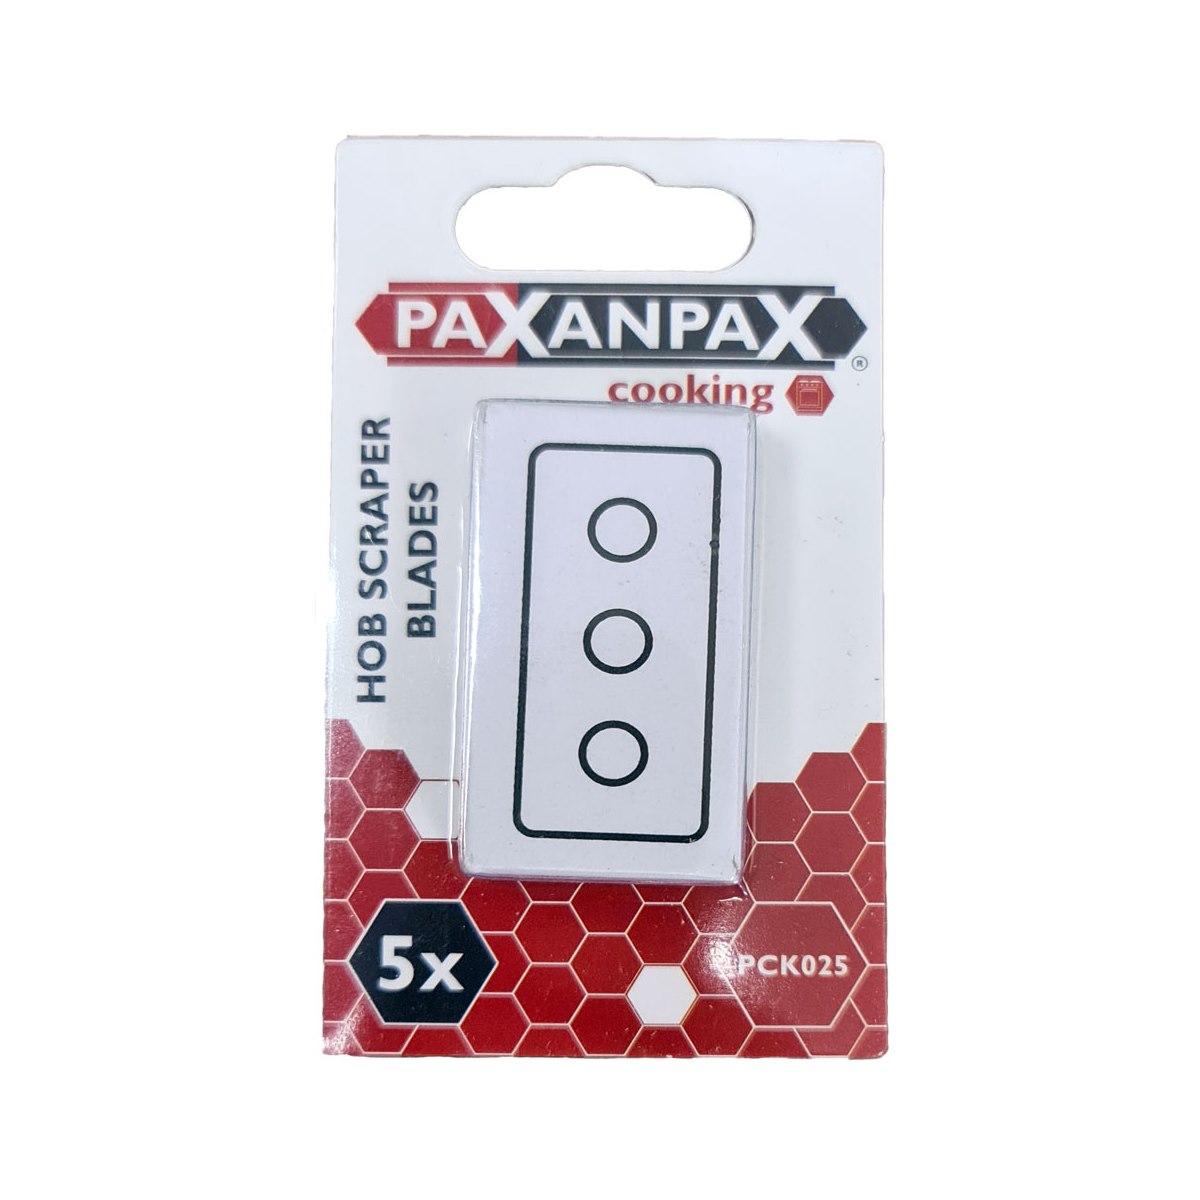 Paxanpax Universal Ceramic Hob Scraper Blades Pack of 5